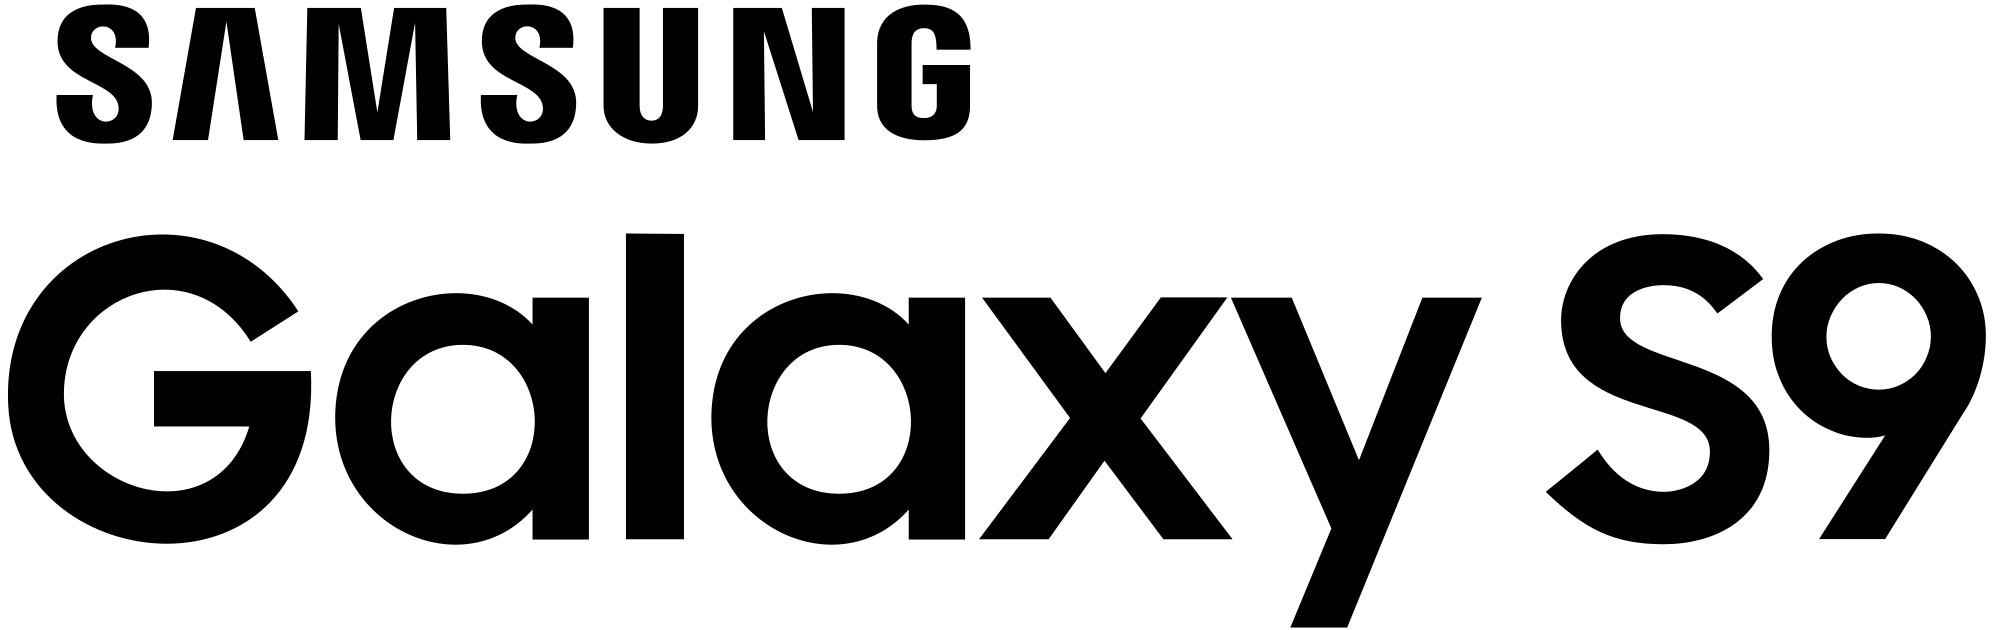 Samsung S9 Logo - Samsung Galaxy S9 logo.svg